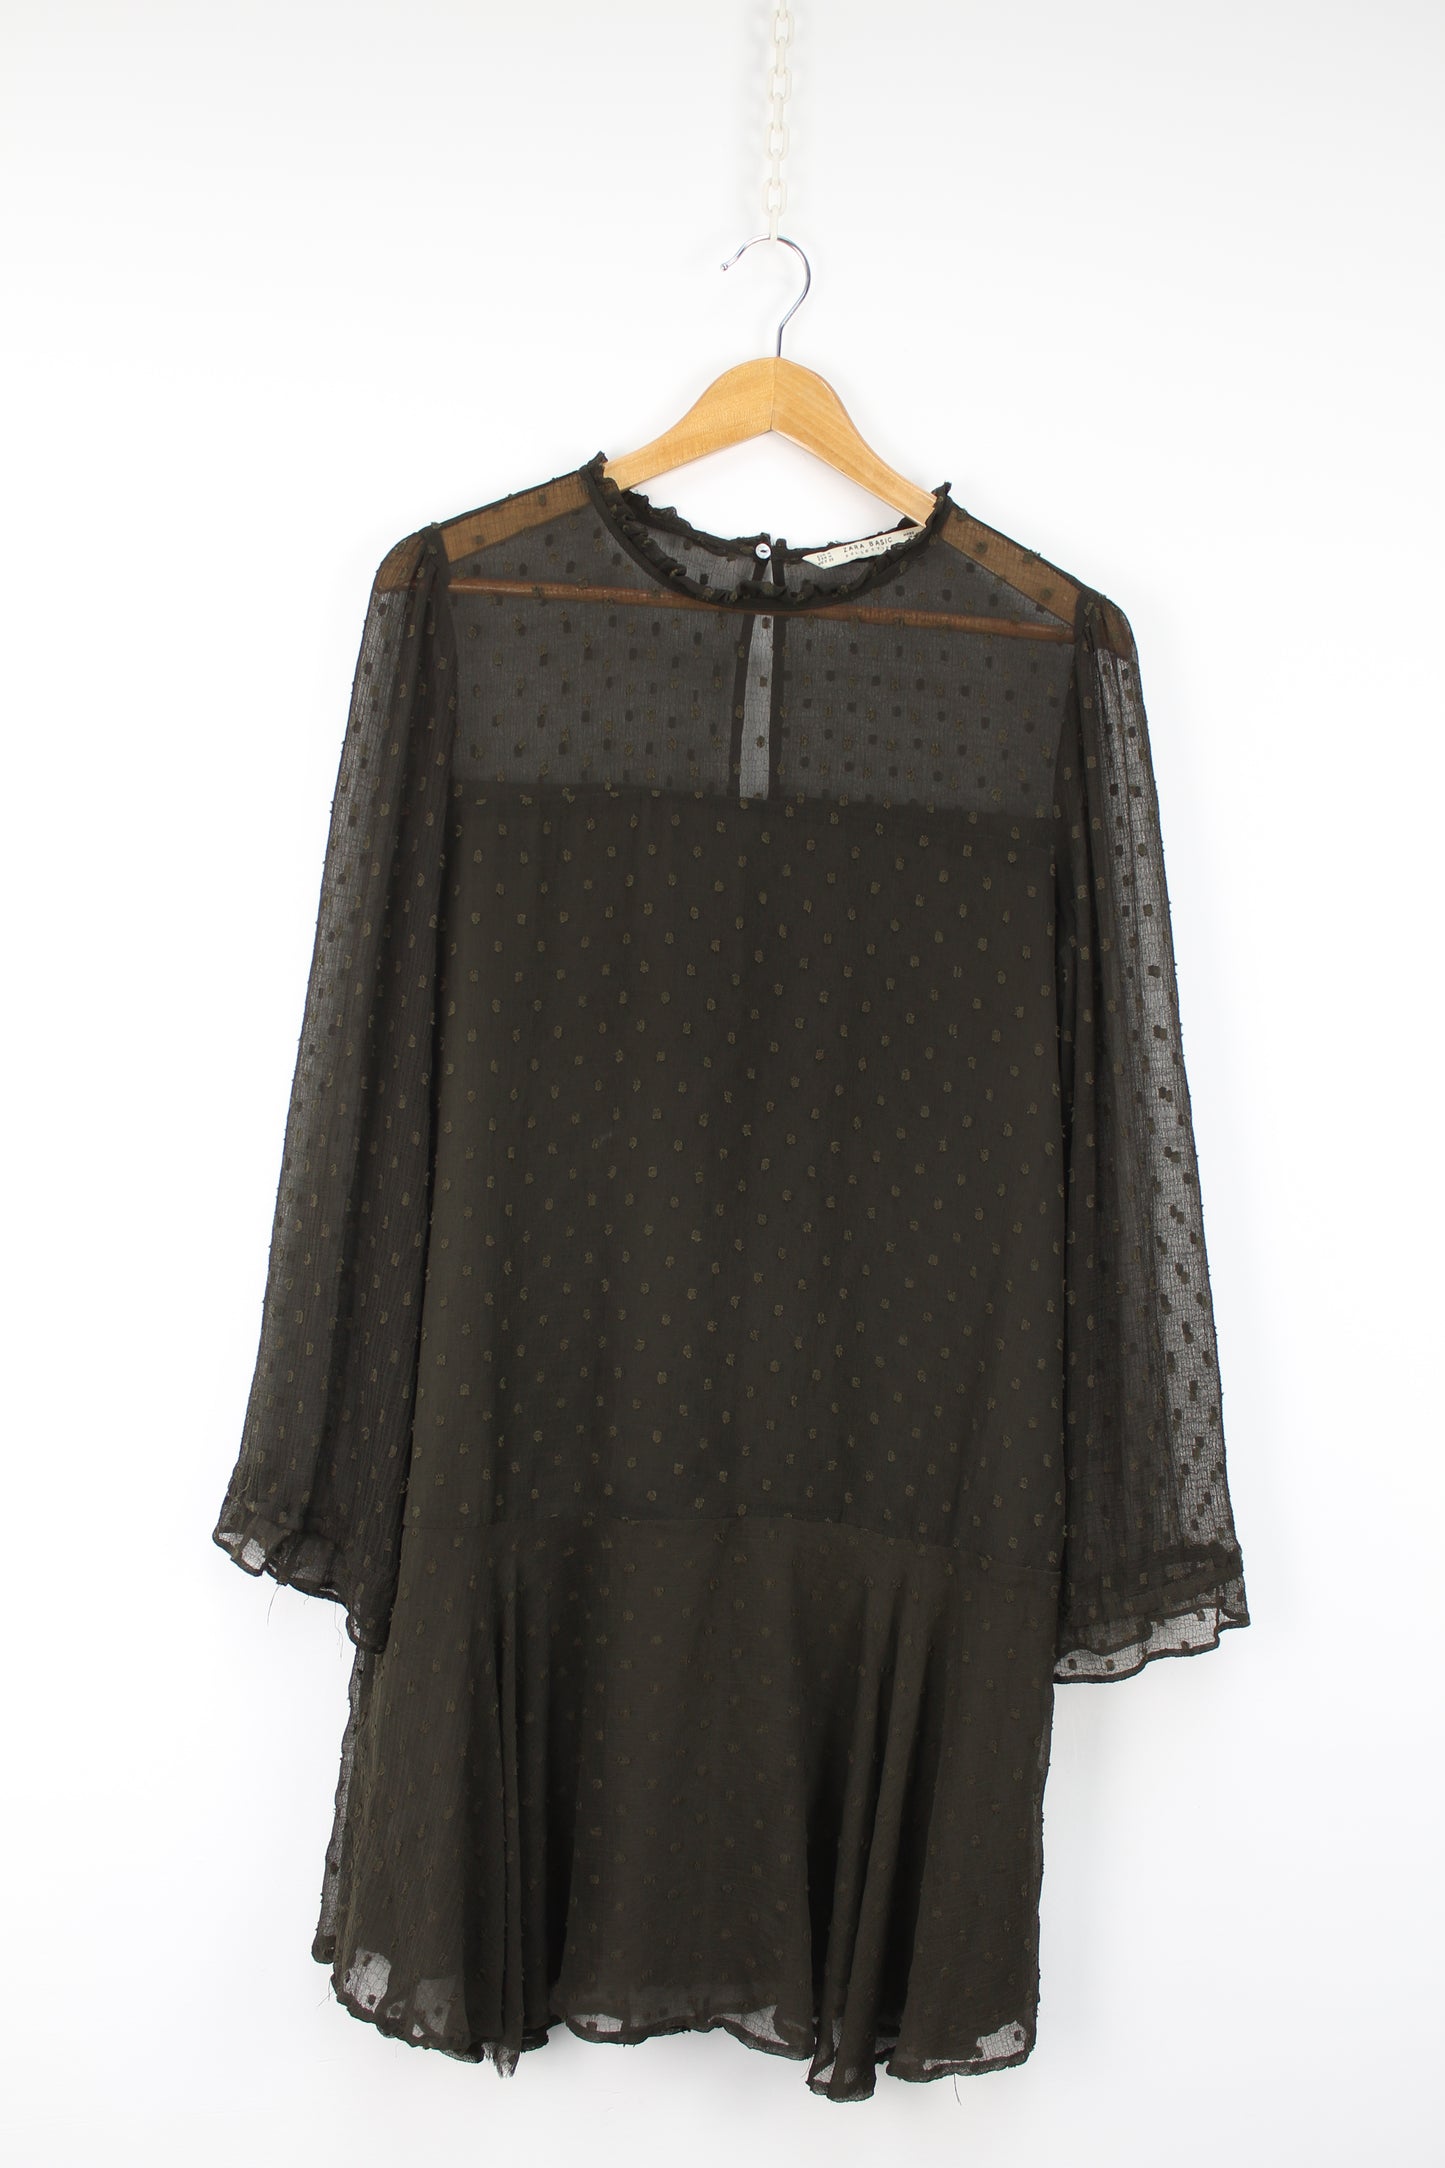 Zara transparante bruine jurk met stipjes maat L